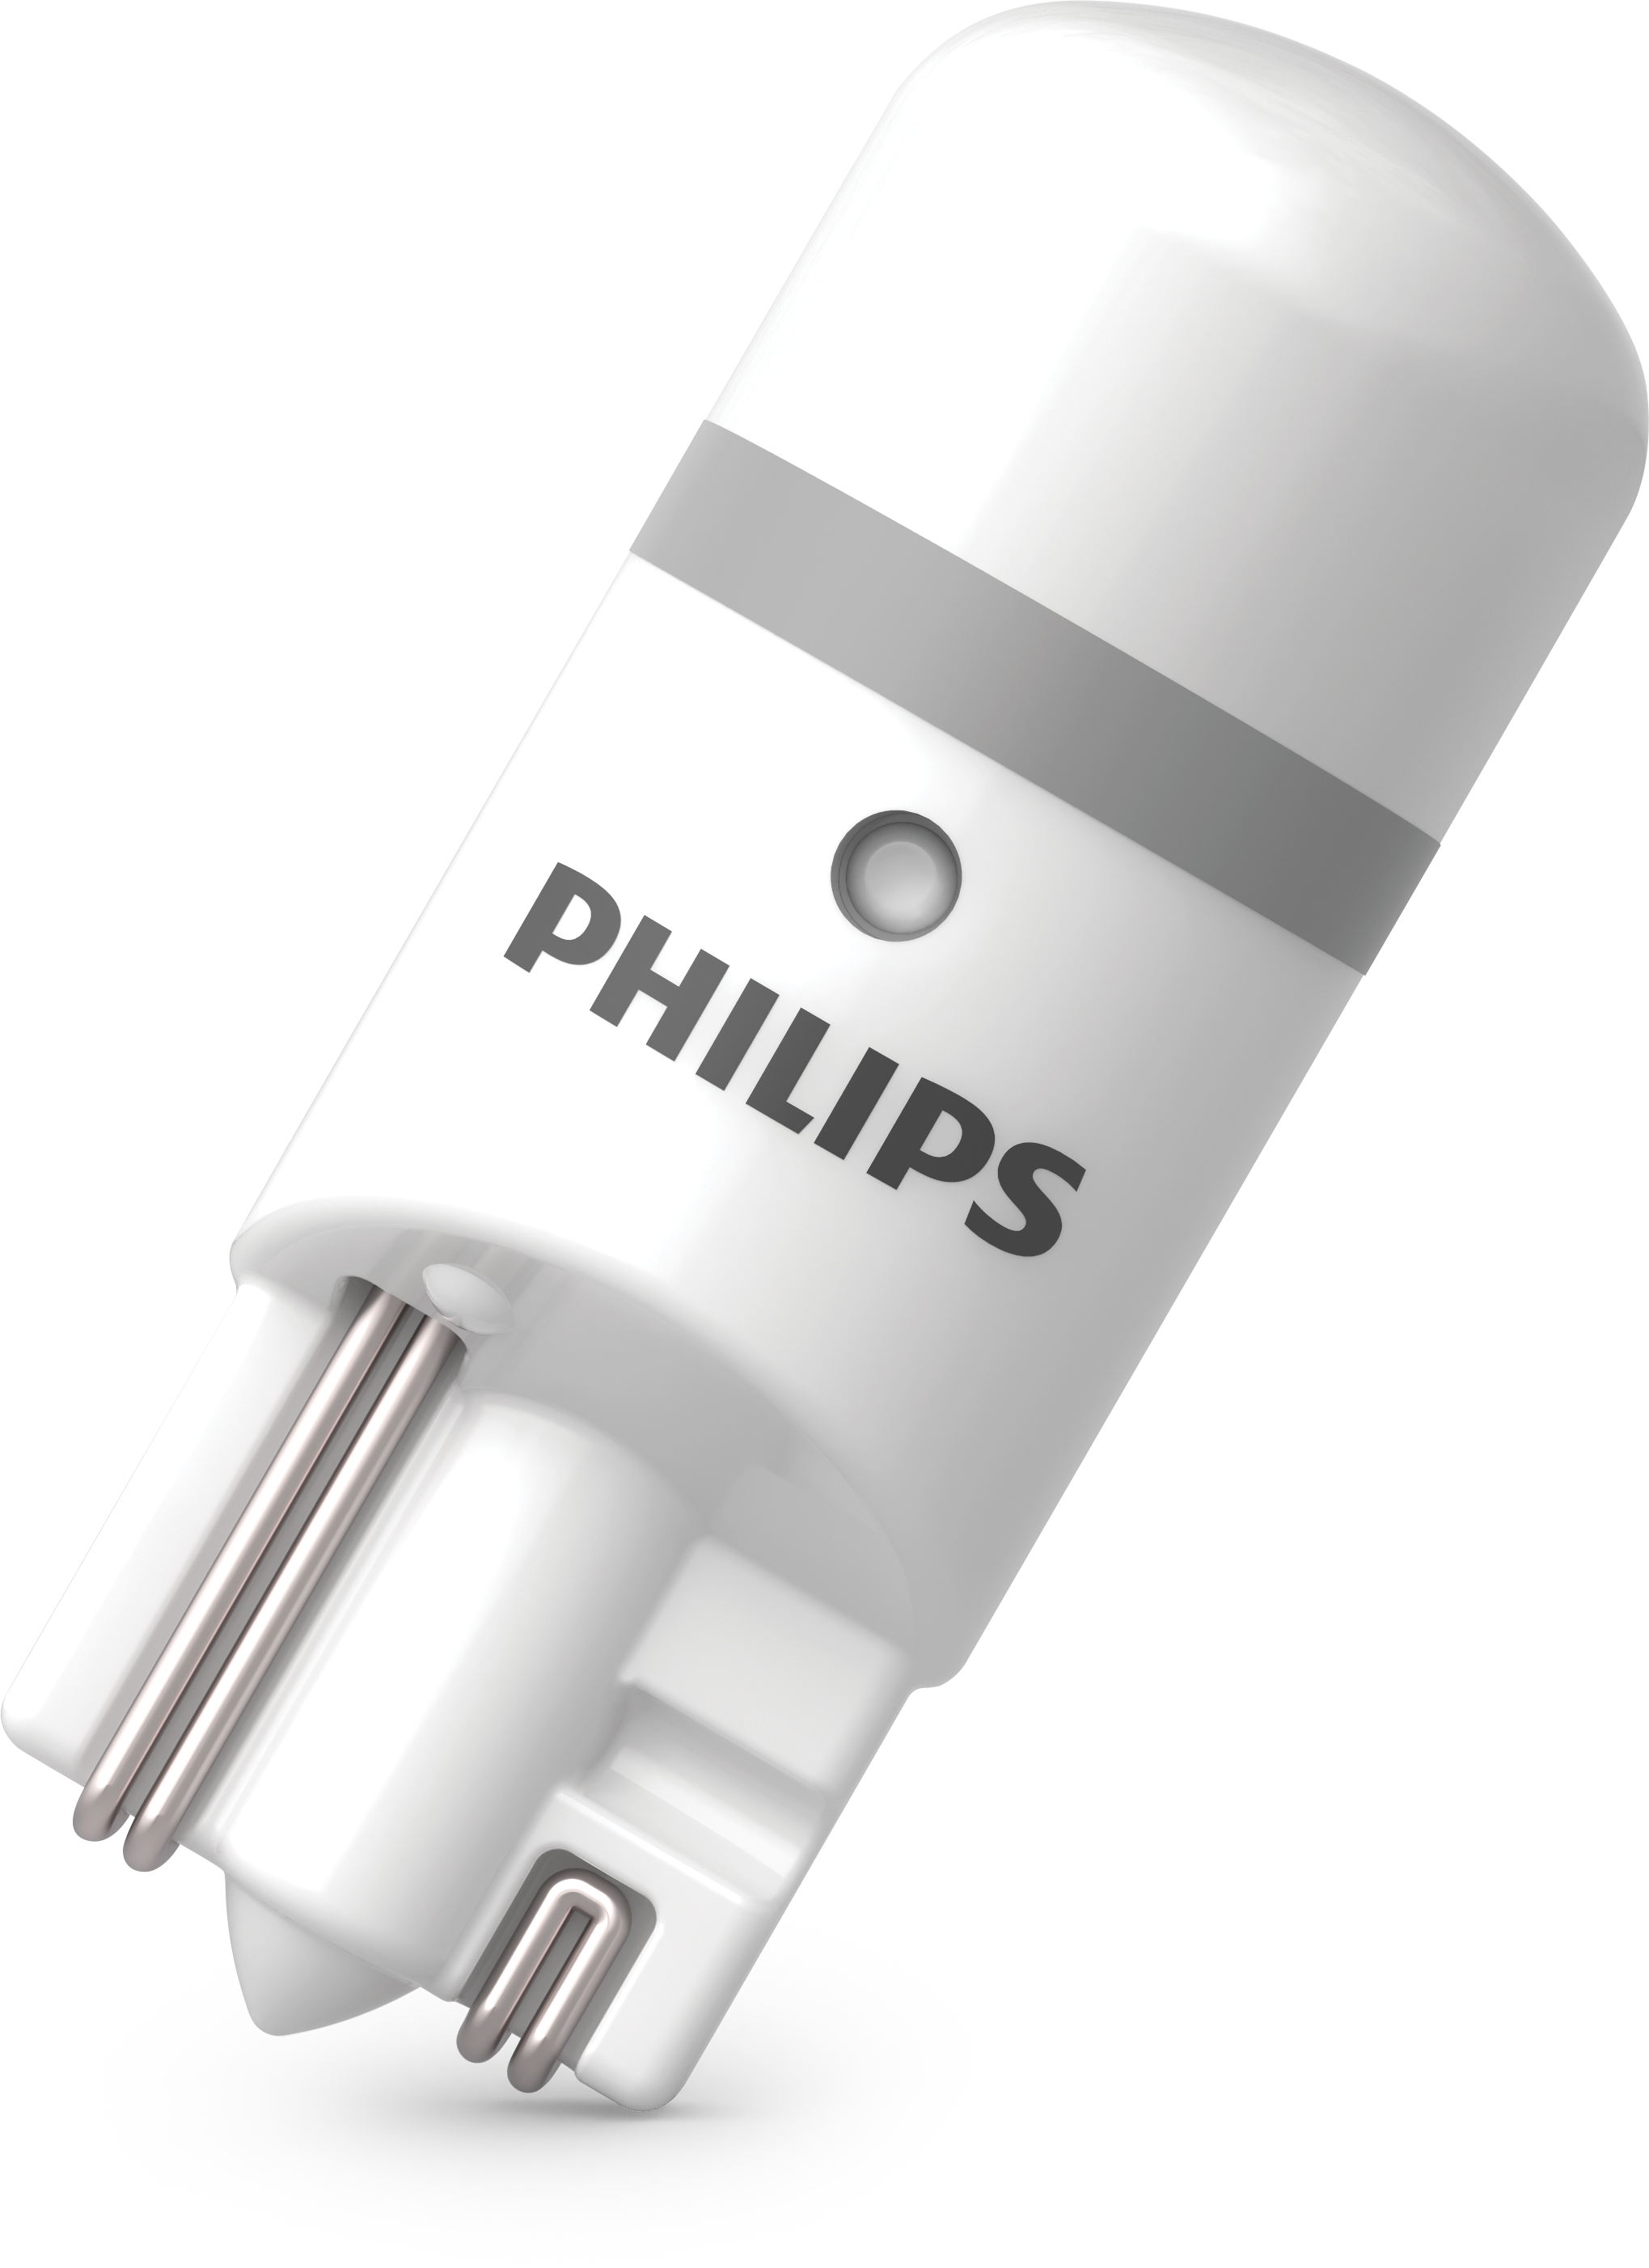 Philips Ultinon Pro6000 LED - Jetzt erstmals als W5W-LED erhältlich!,  Lumileds Germany GmbH, Story - PresseBox